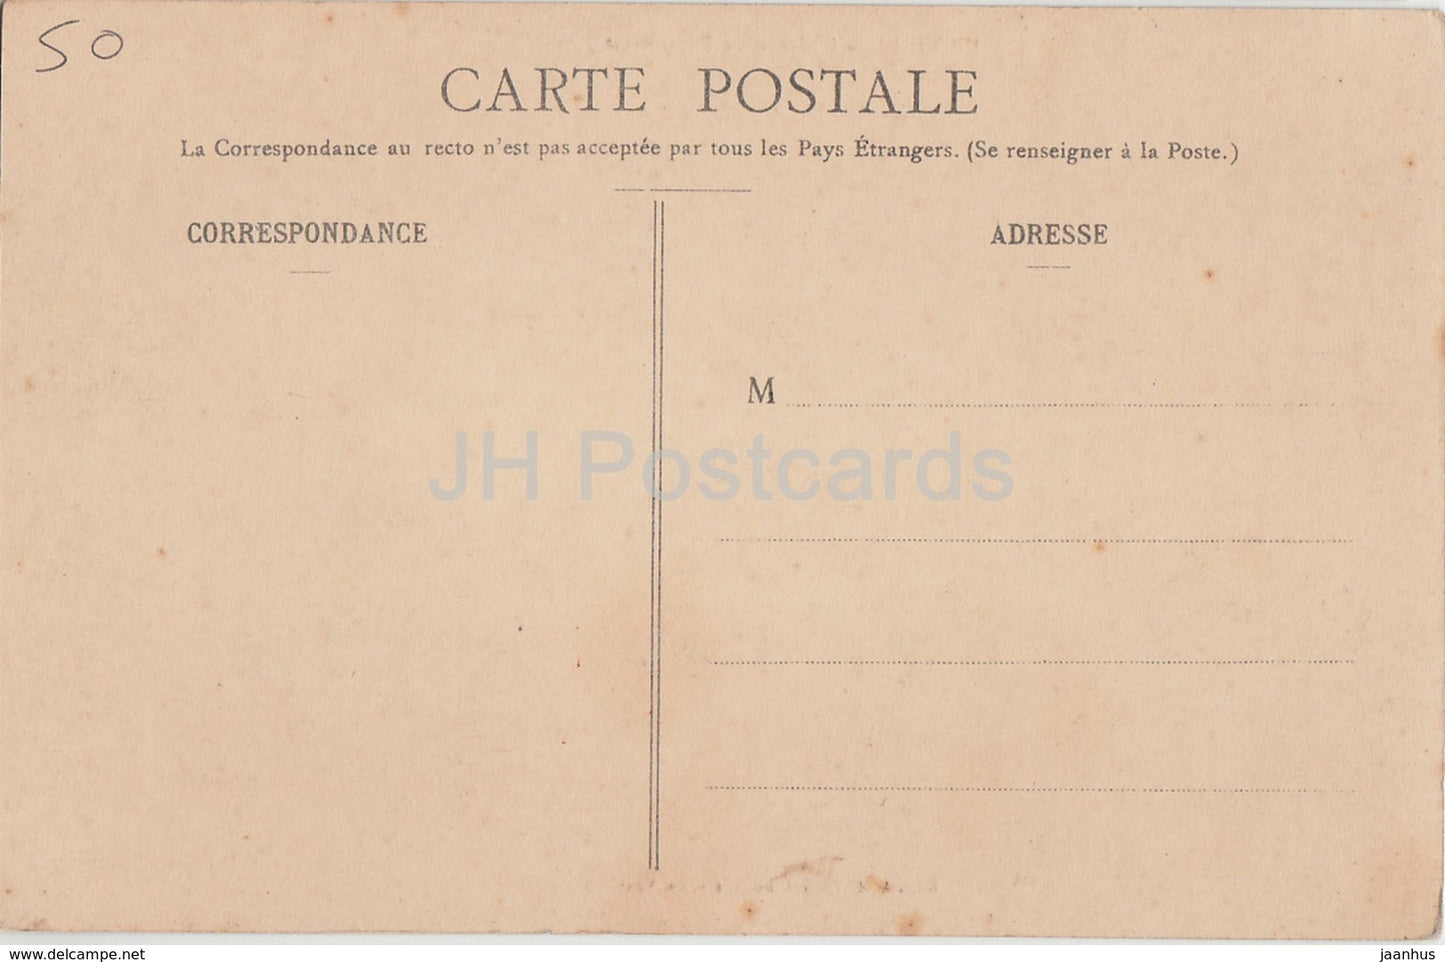 Le Vicel - Château de Pepinvast - château - carte postale ancienne - France - inutilisé